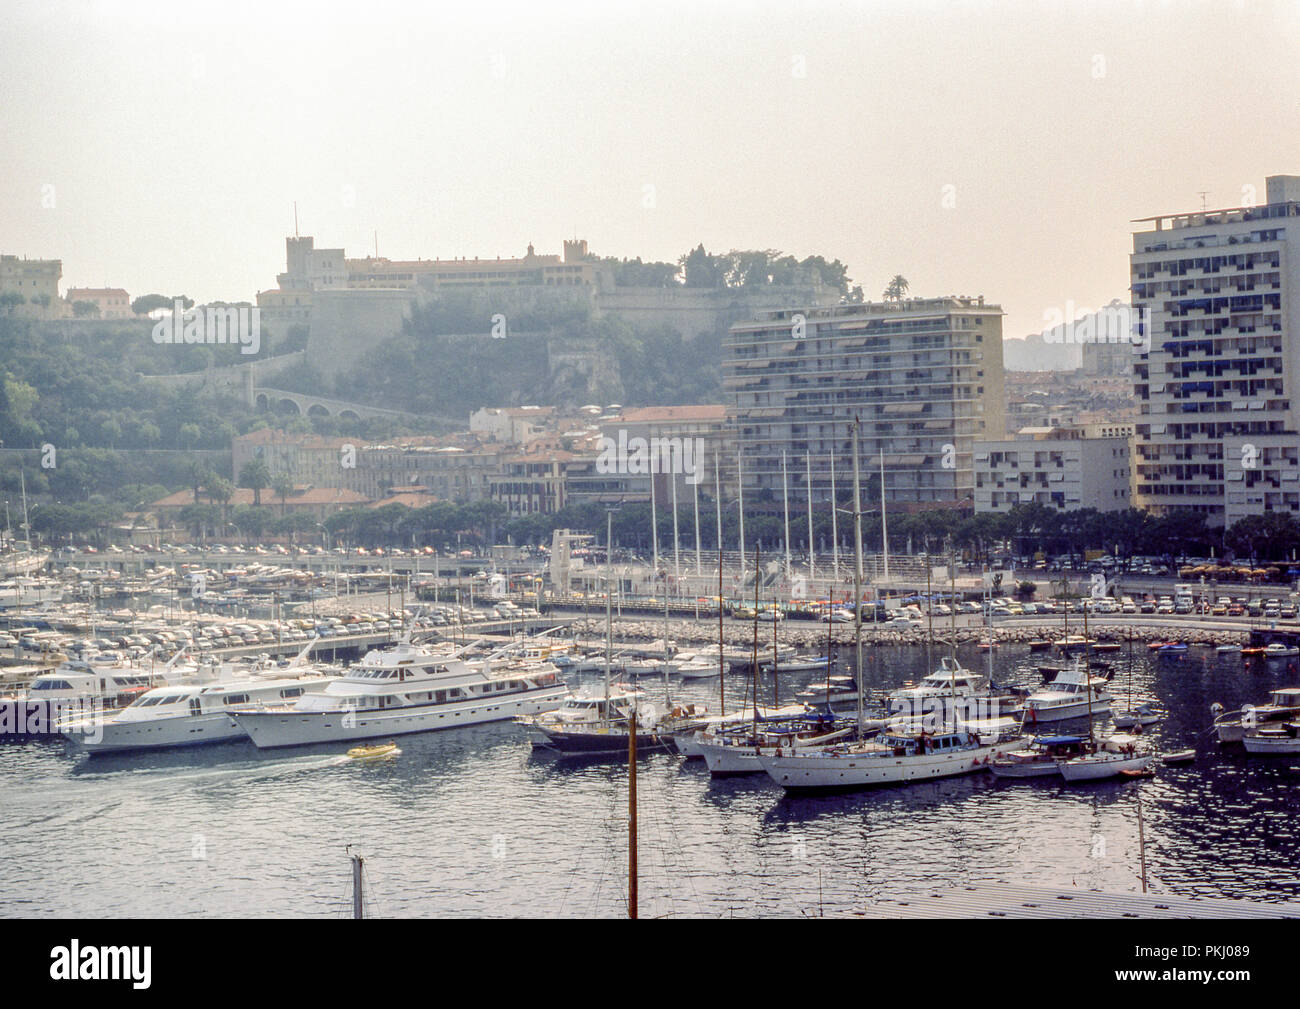 Puerto de Fontvieille, visto desde un barco de vela en 1976. Archivo original imagen tomada en 1976. Foto de stock